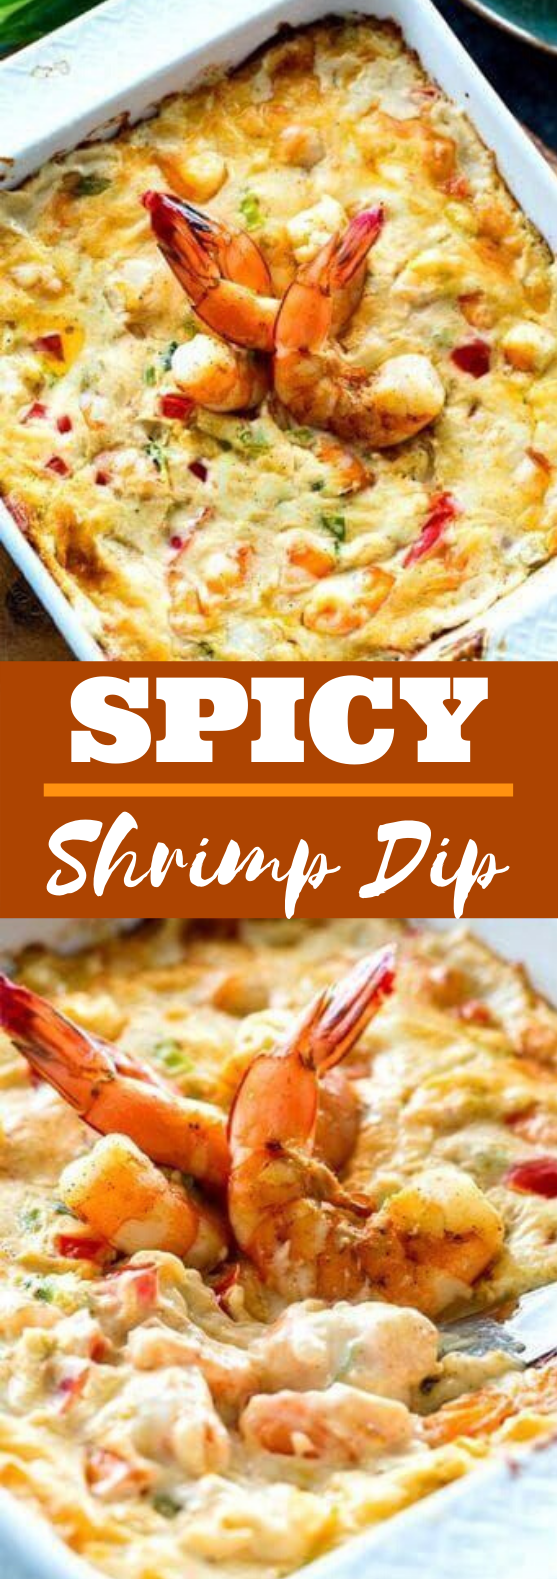 Spicy Shrimp Dip #appetizers #party #recipes #shrimp #gameday